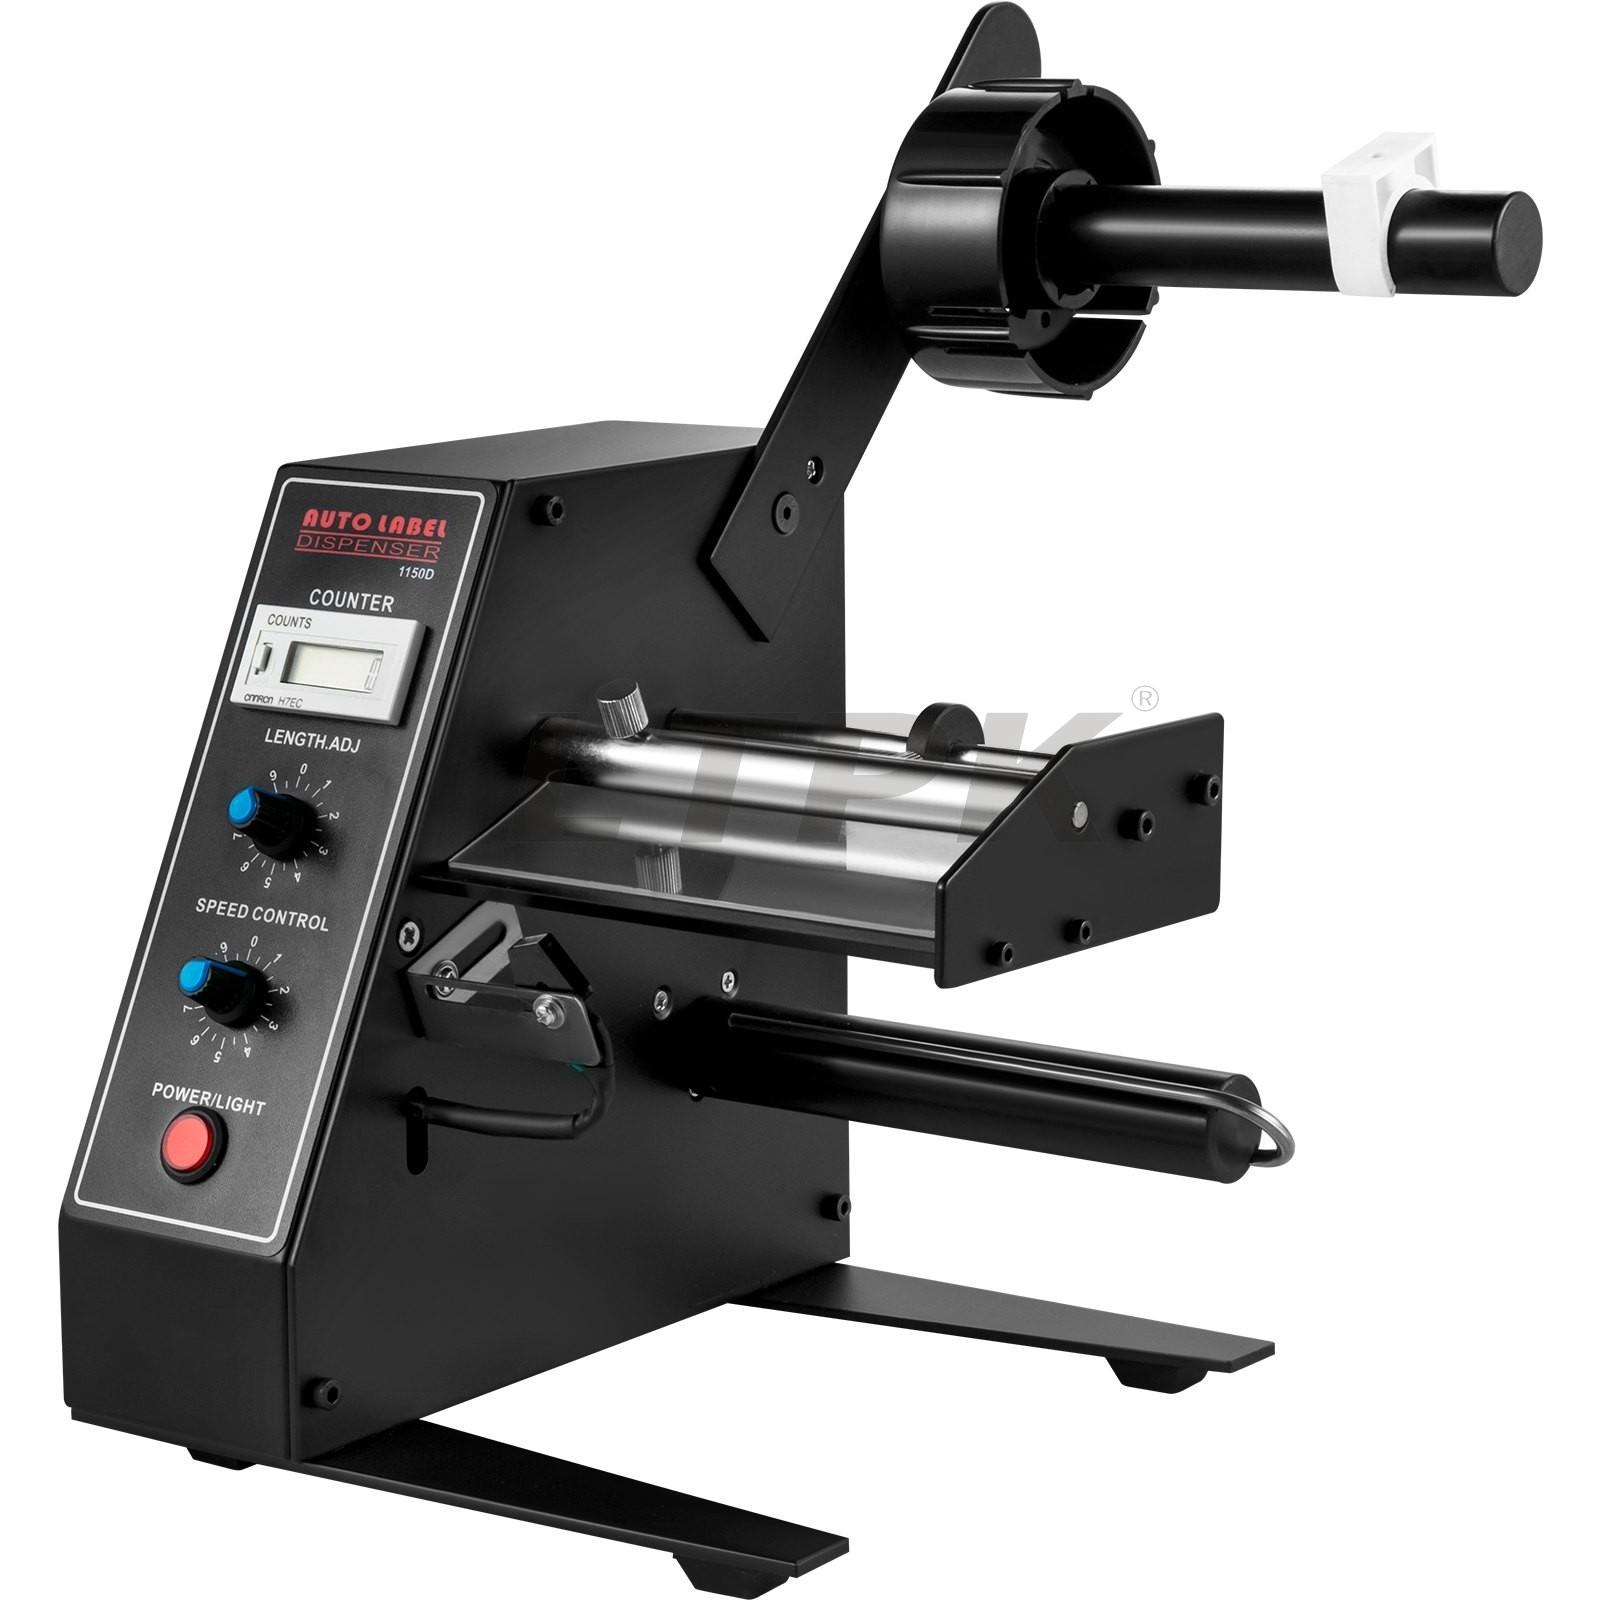 LT-1150D Automatic Manual Label Stripper Label Machine 